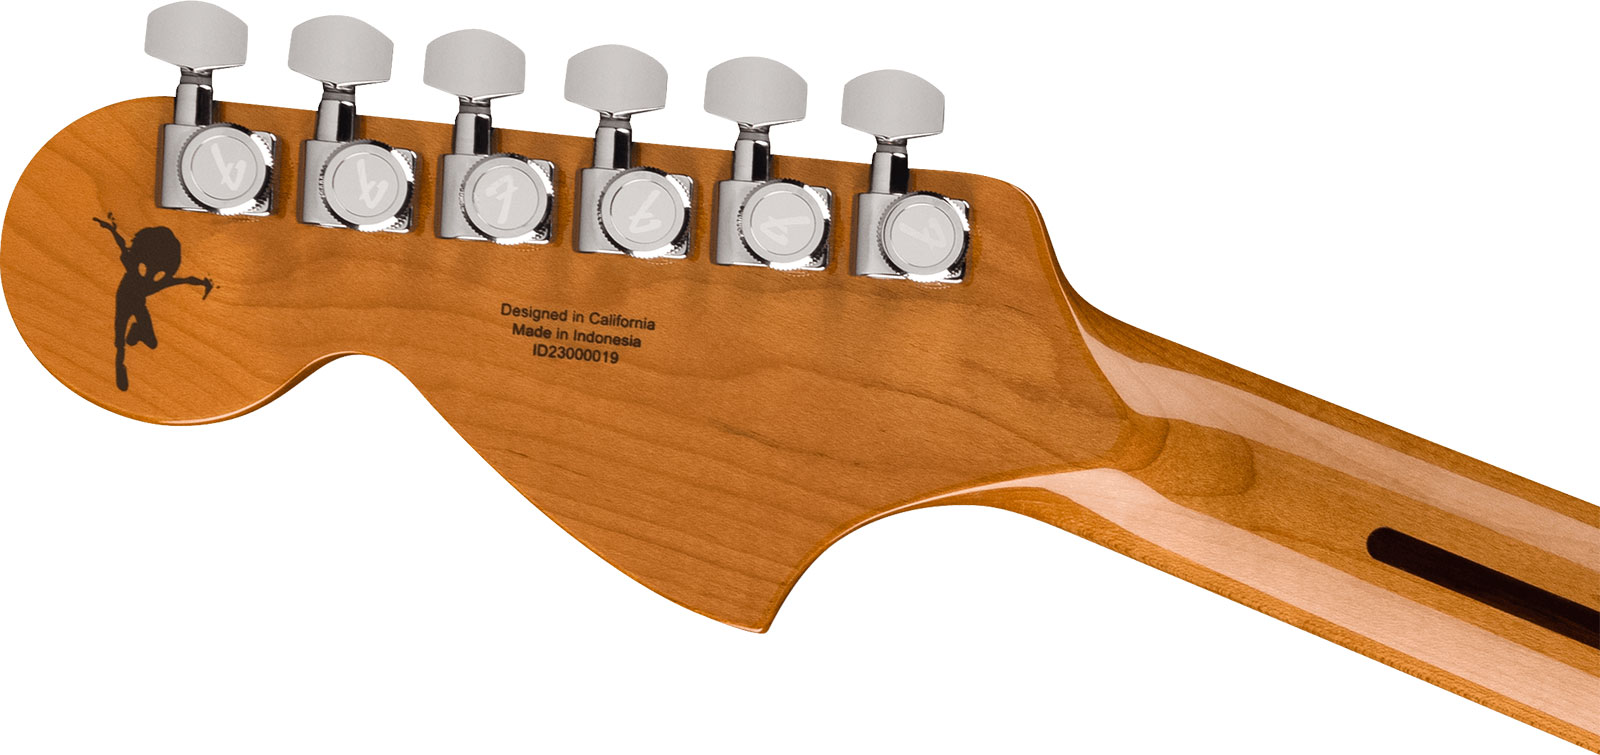 Fender Tom Delonge Starcaster 1h Seymour Duncan Ht Rw - Satin Surf Green - Semi hollow elektriche gitaar - Variation 4